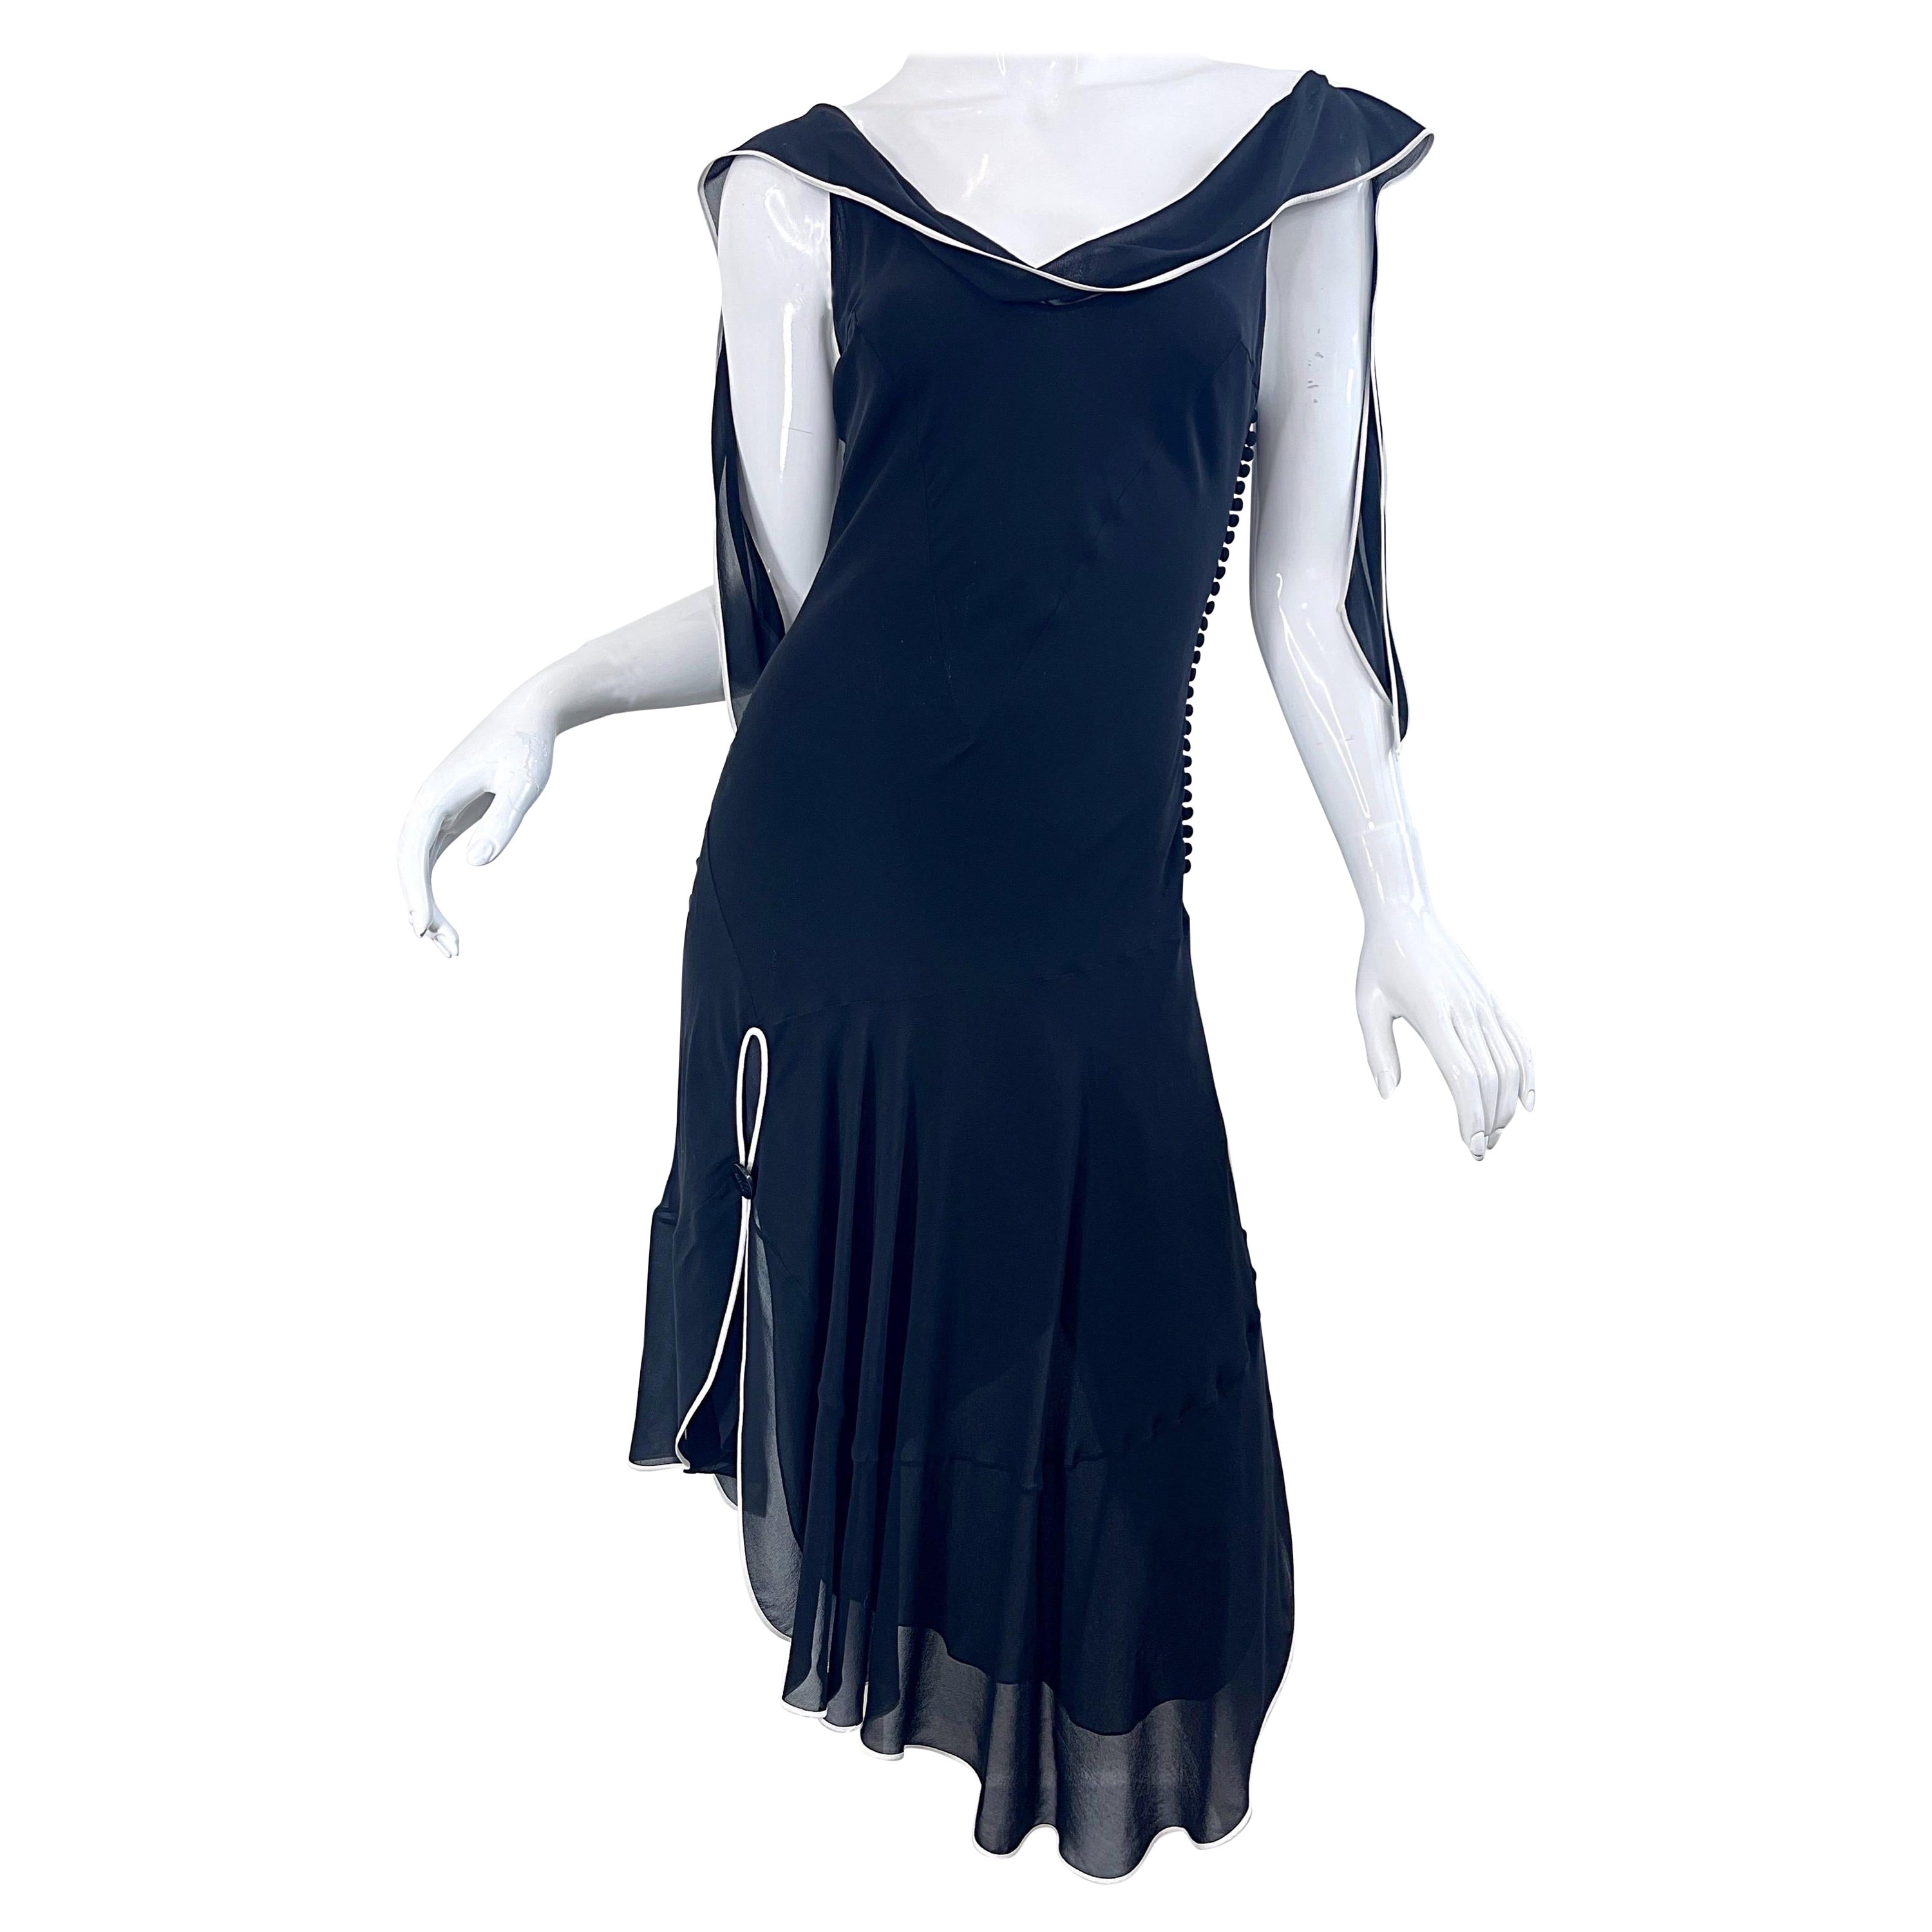 Christian Dior by John Galliano S/S 2005 Size 6 Black White Silk Chiffon Dress For Sale